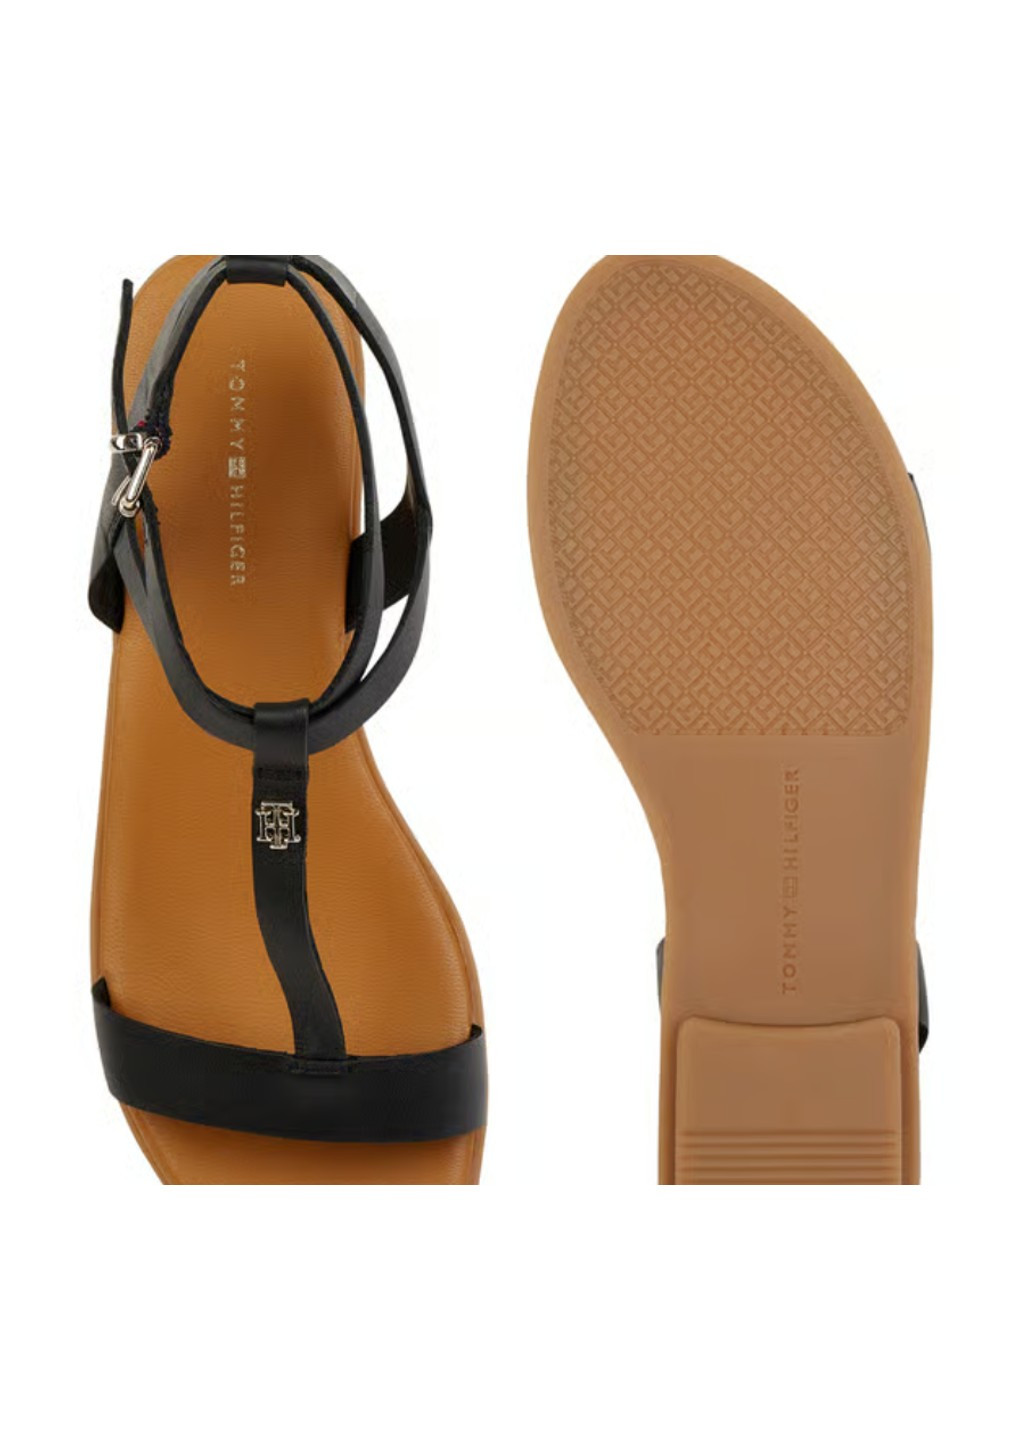 Черные босоножки feminine leather flat sandal Tommy Hilfiger